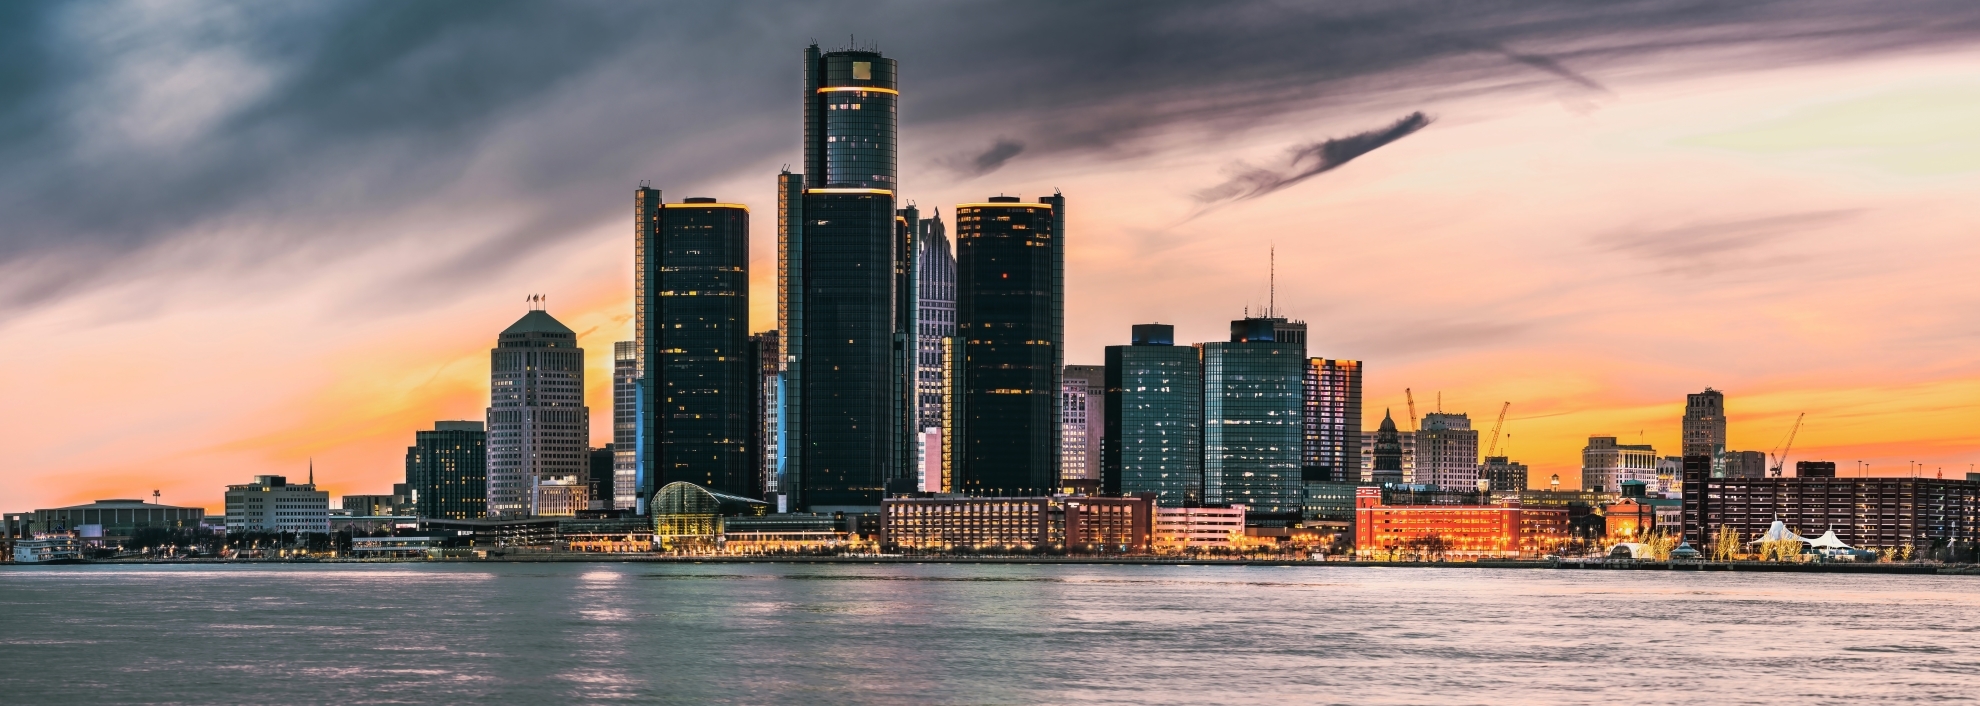 Detroit city skyline at dusk